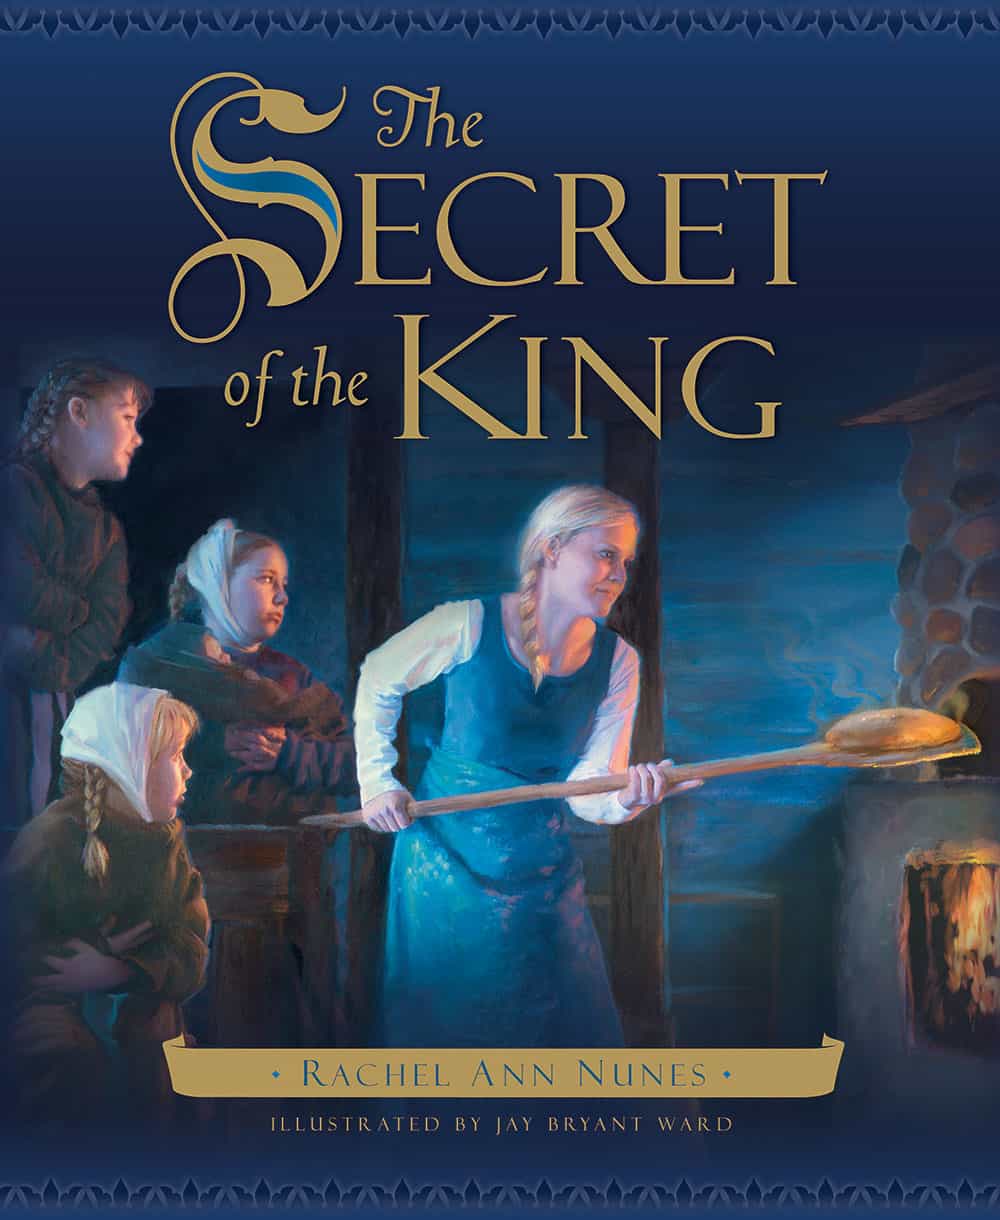 The Secret of the King by Rachel Ann Nunes